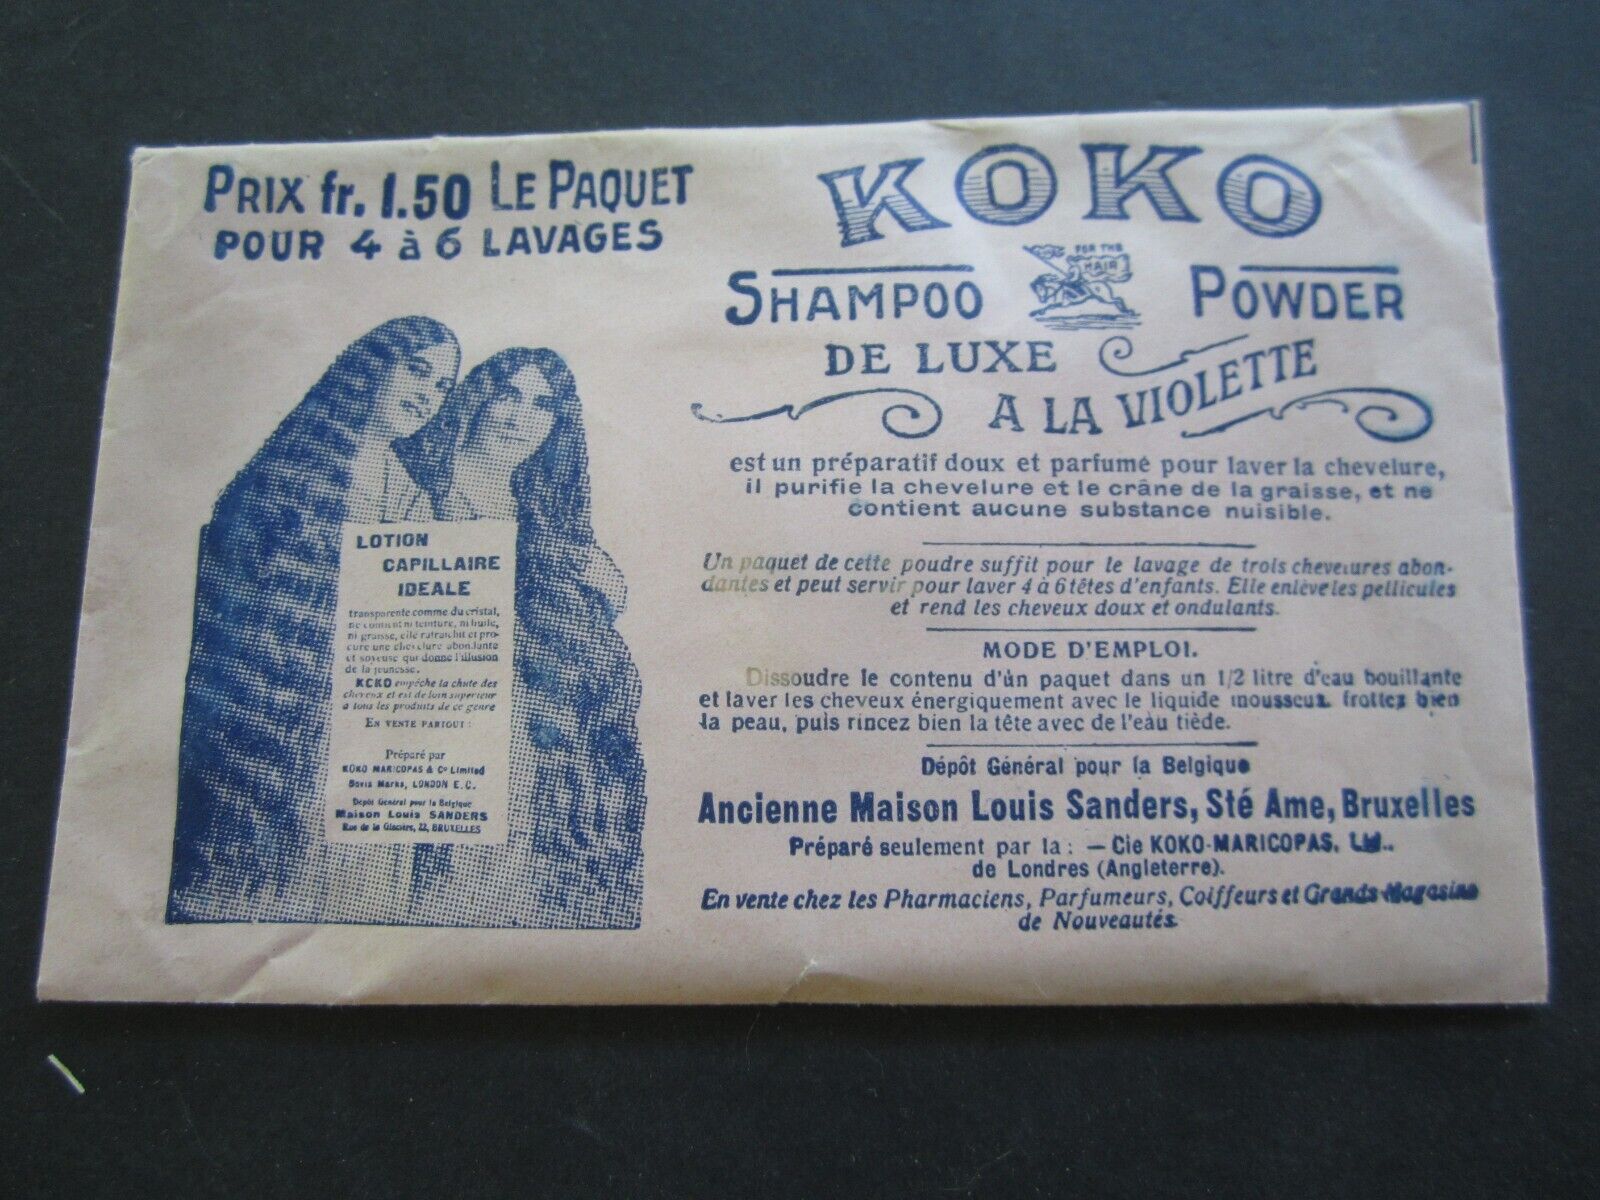 Old Vintage - KOKO Shampoo de Luxe a la Violette - ENVELOPE - Full with Product